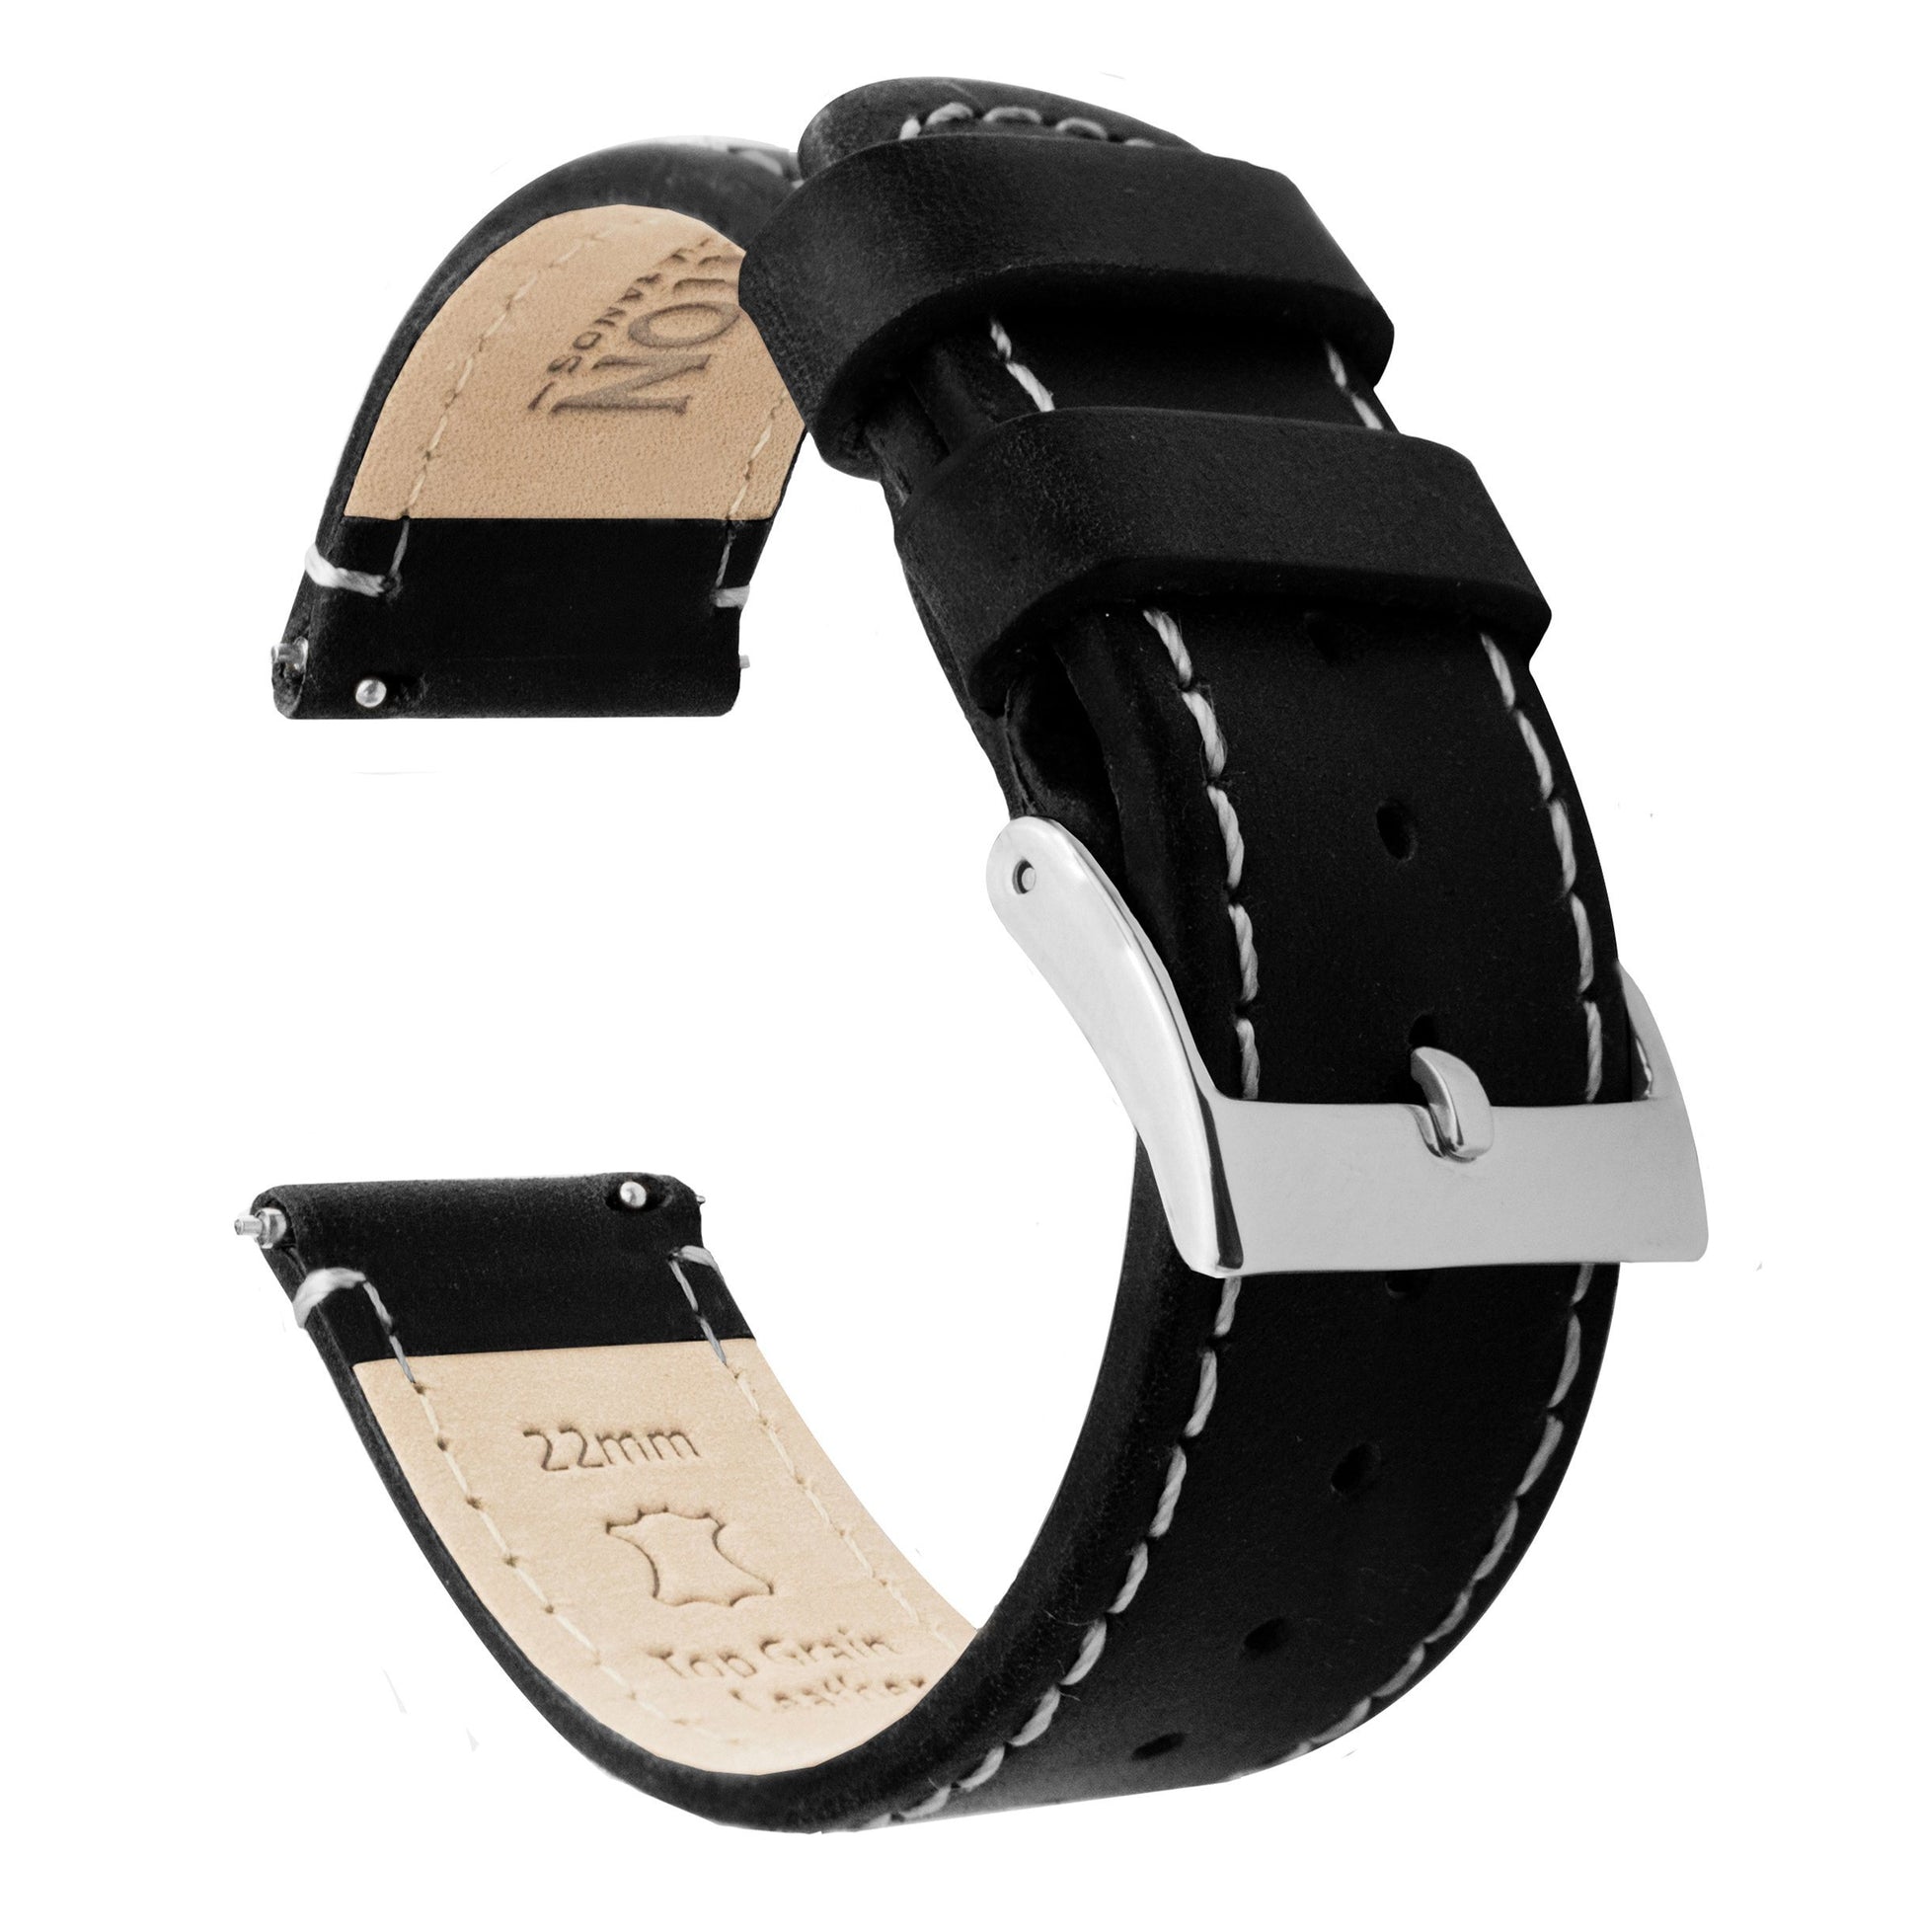 Samsung Galaxy Watch Active 2 | Black Leather & Linen White Stitching - Barton Watch Bands